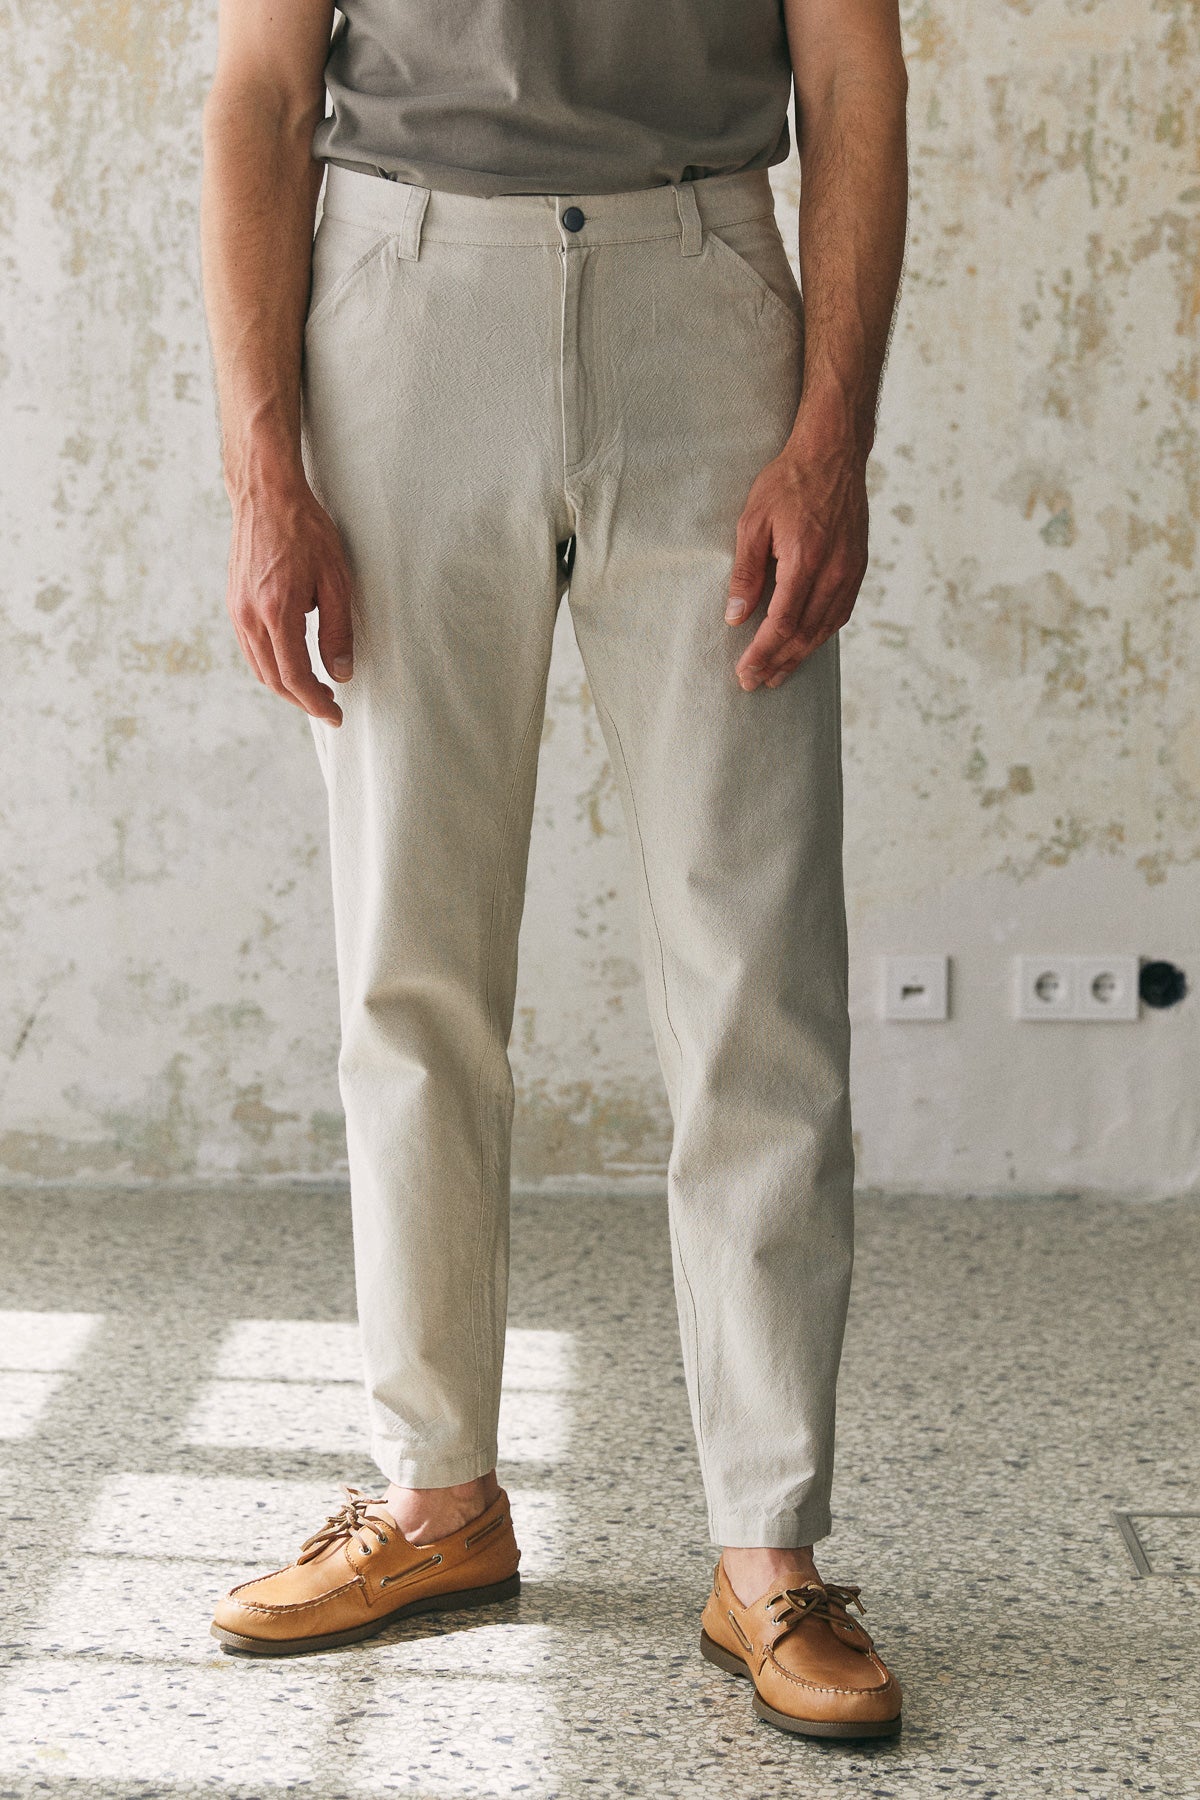 OLF trousers eco canvas sand 230g